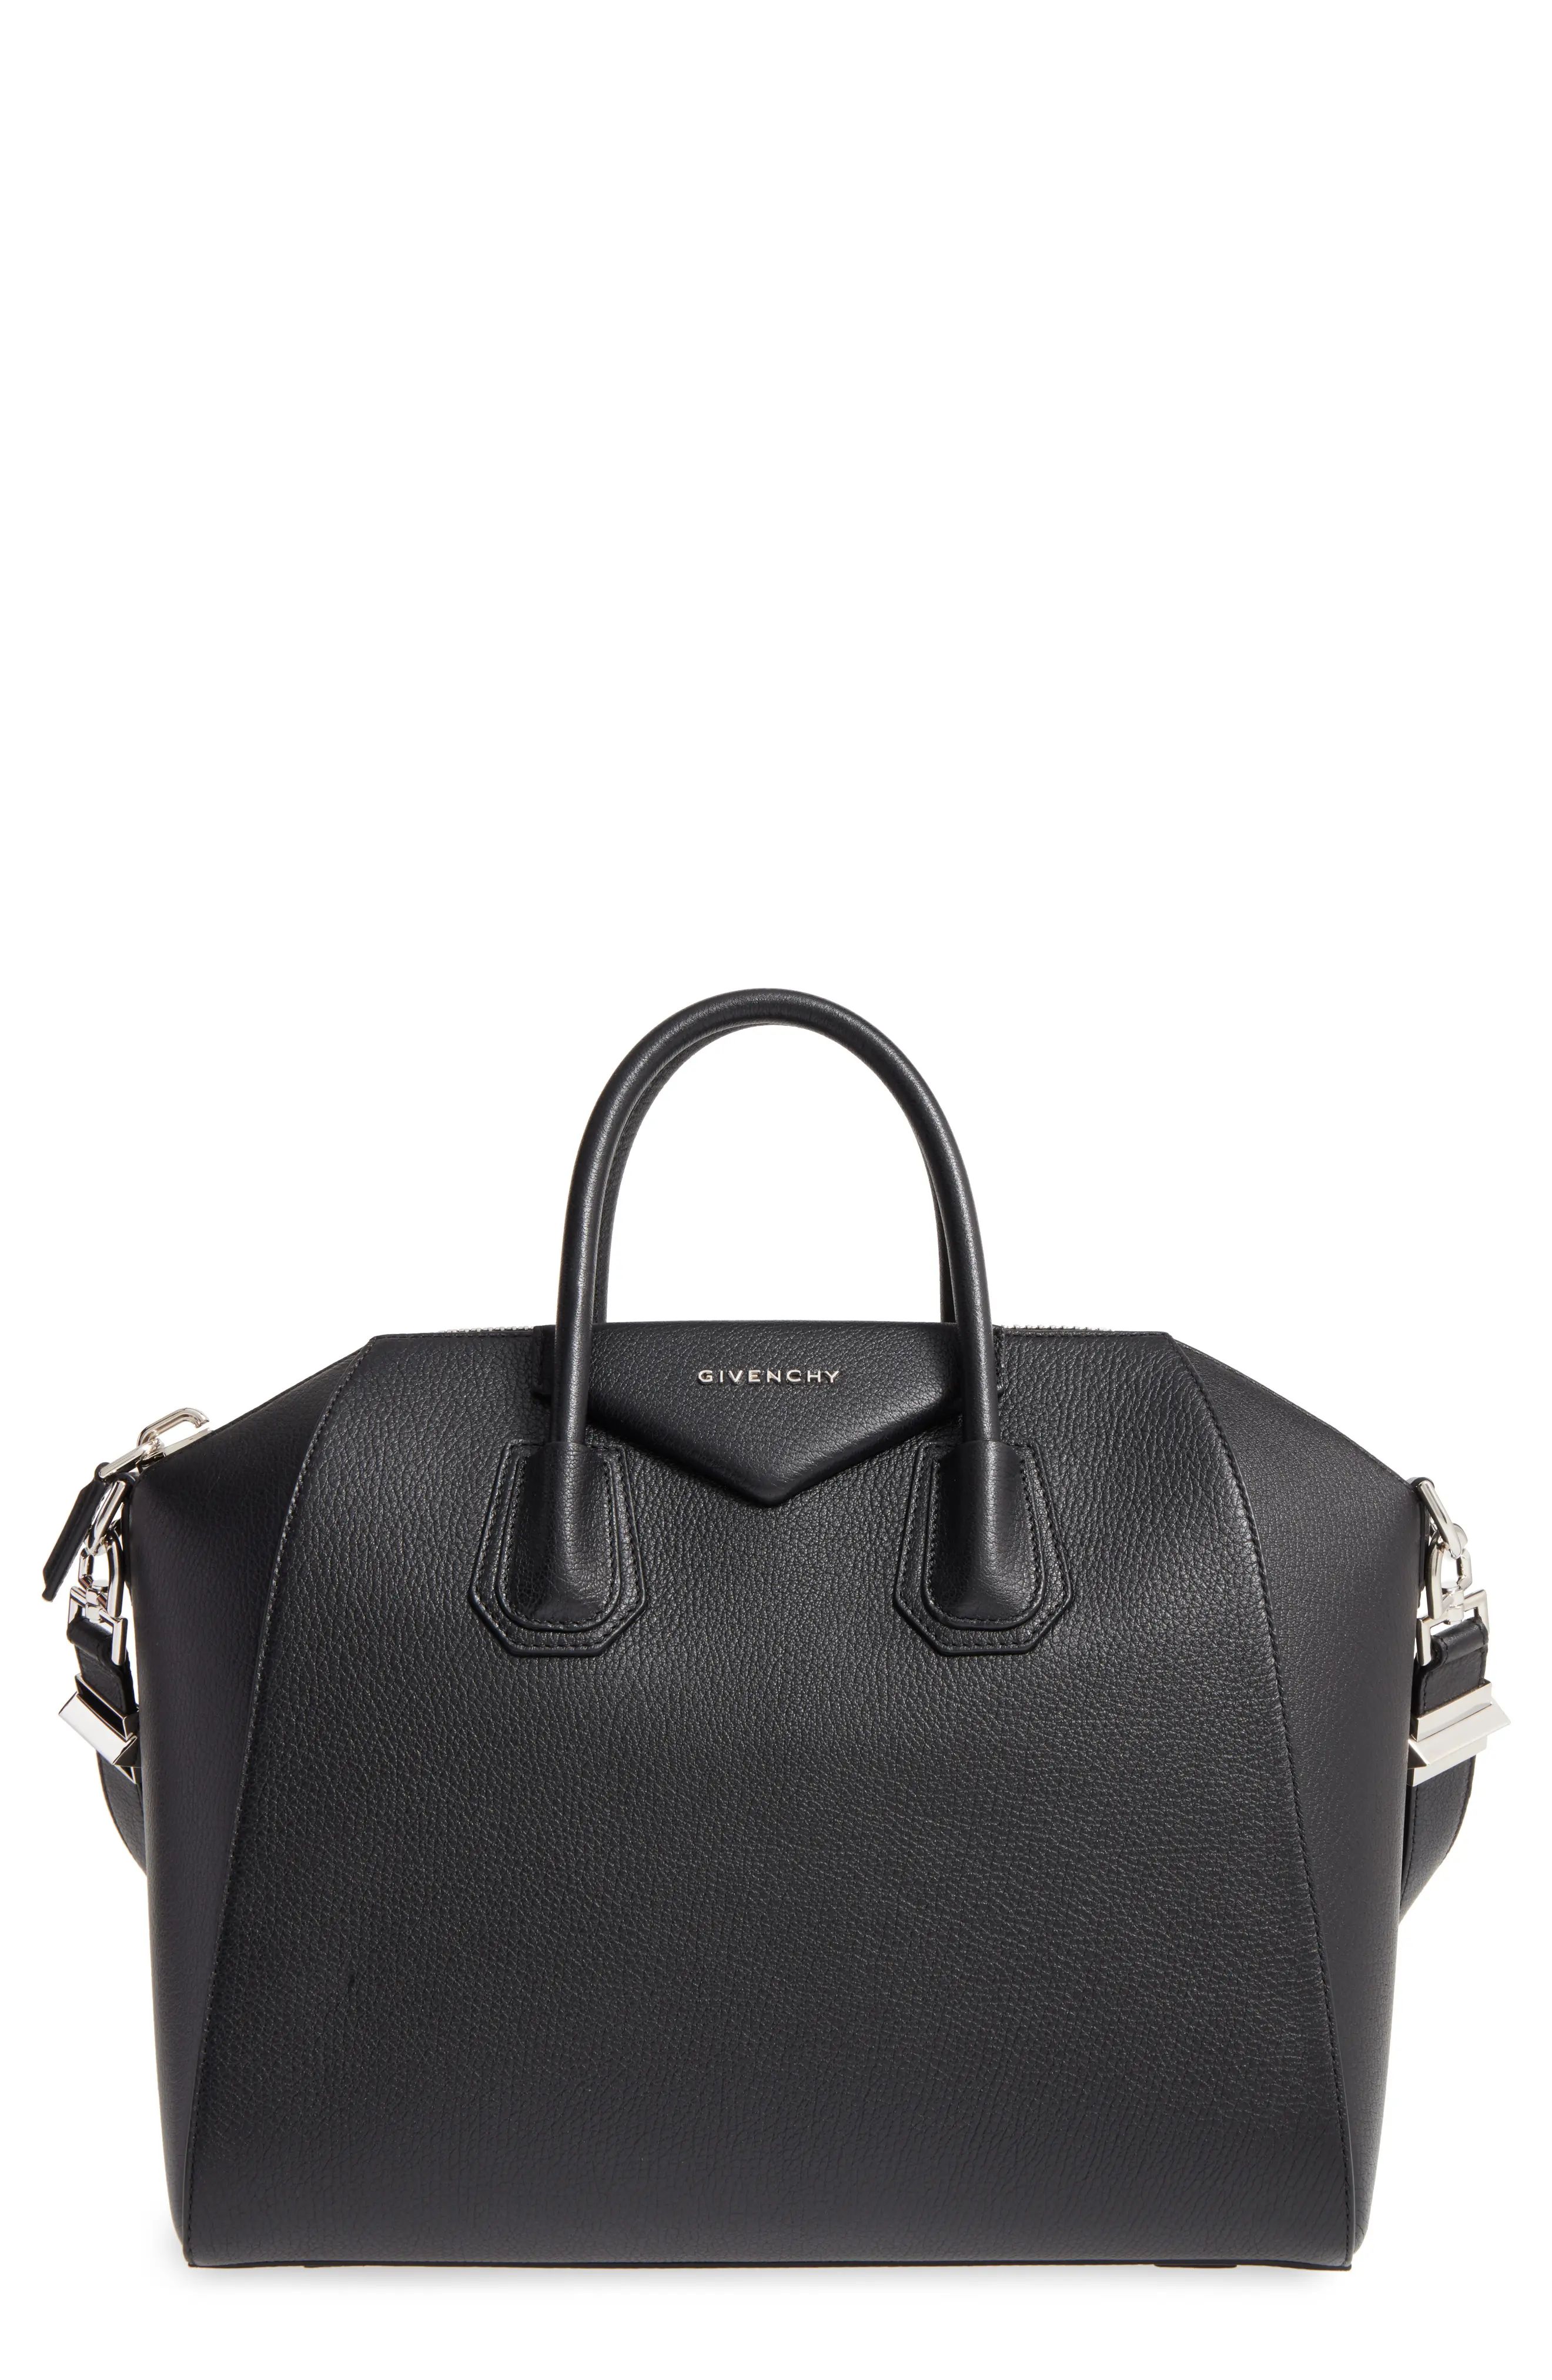 Givenchy 'Medium Antigona' Sugar Leather Satchel | Nordstrom